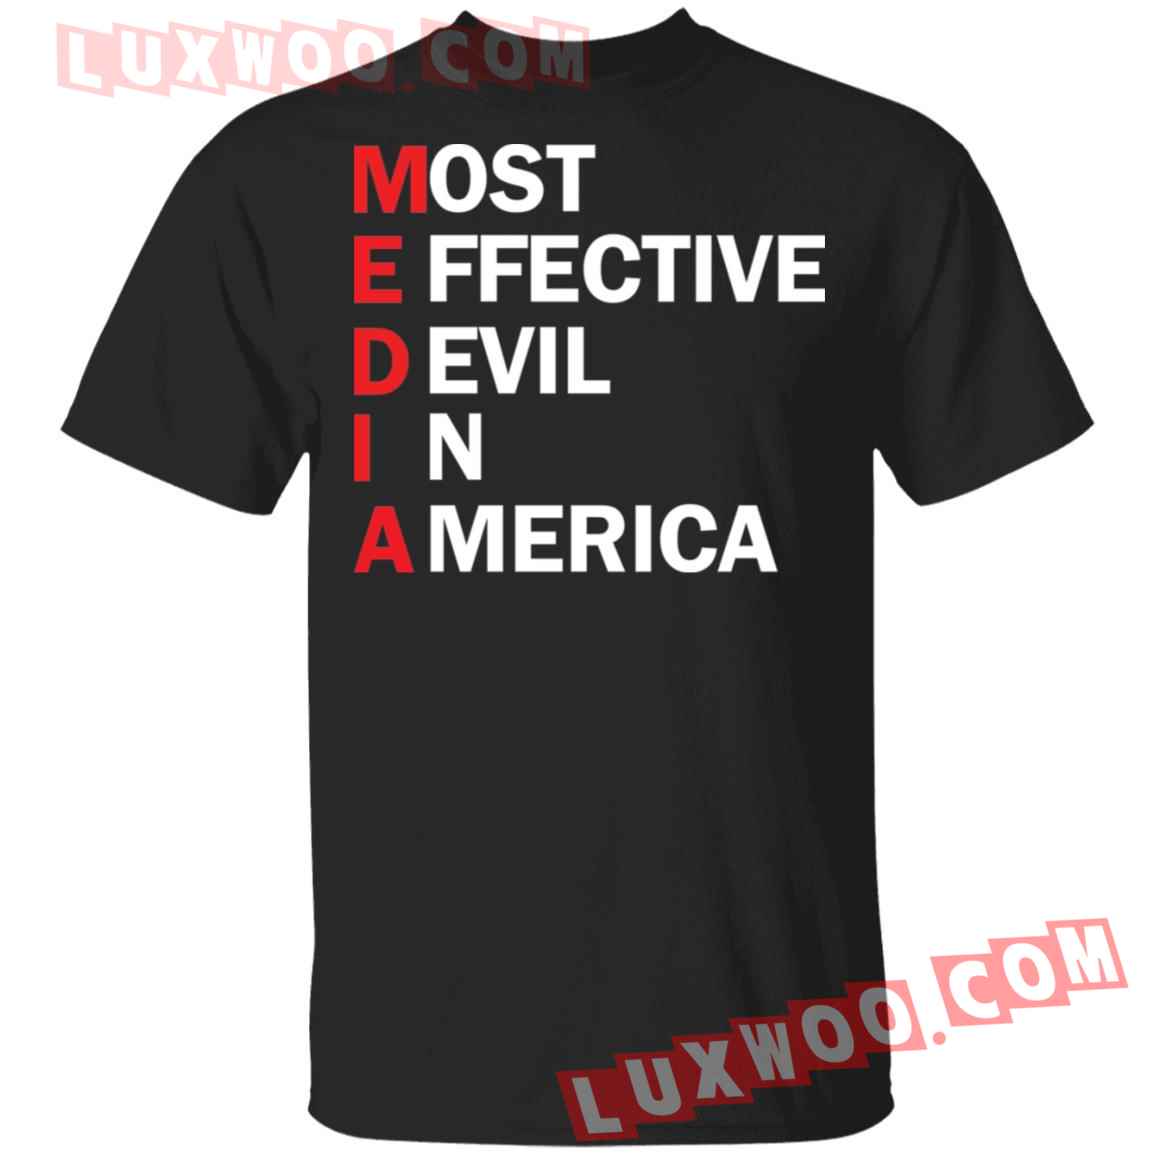 Media Most Effective Devil In America Shirt